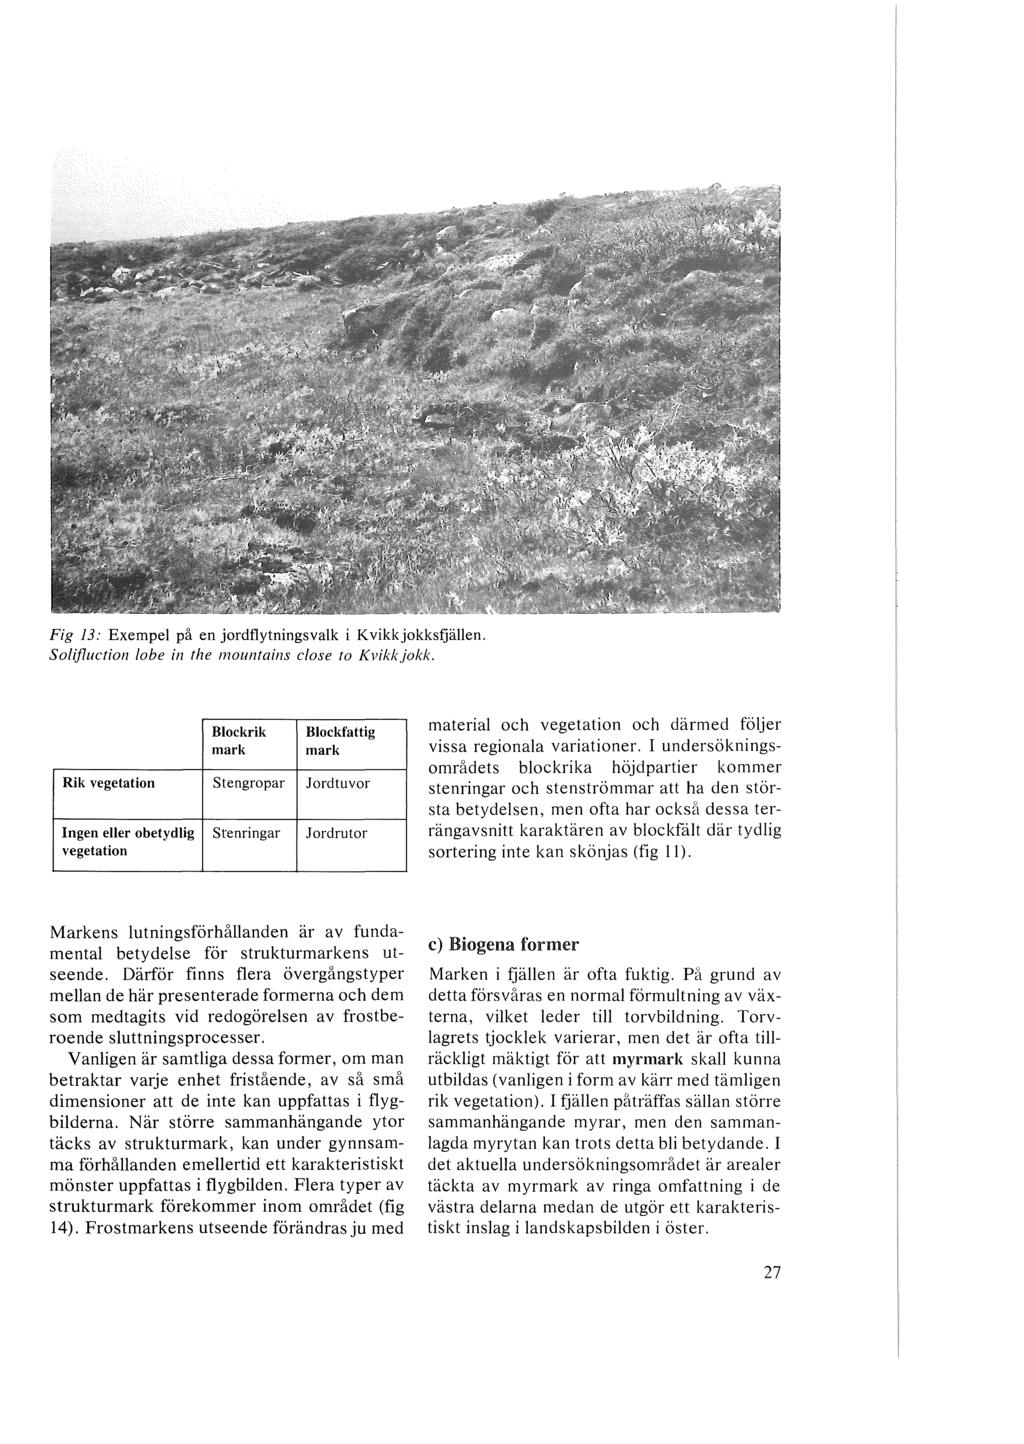 Fig 13: Exempel på en jordflytningsvalk i Kvikkjokksfjällen. Solijluction lobe in the mountains close to Kvikkjokk.